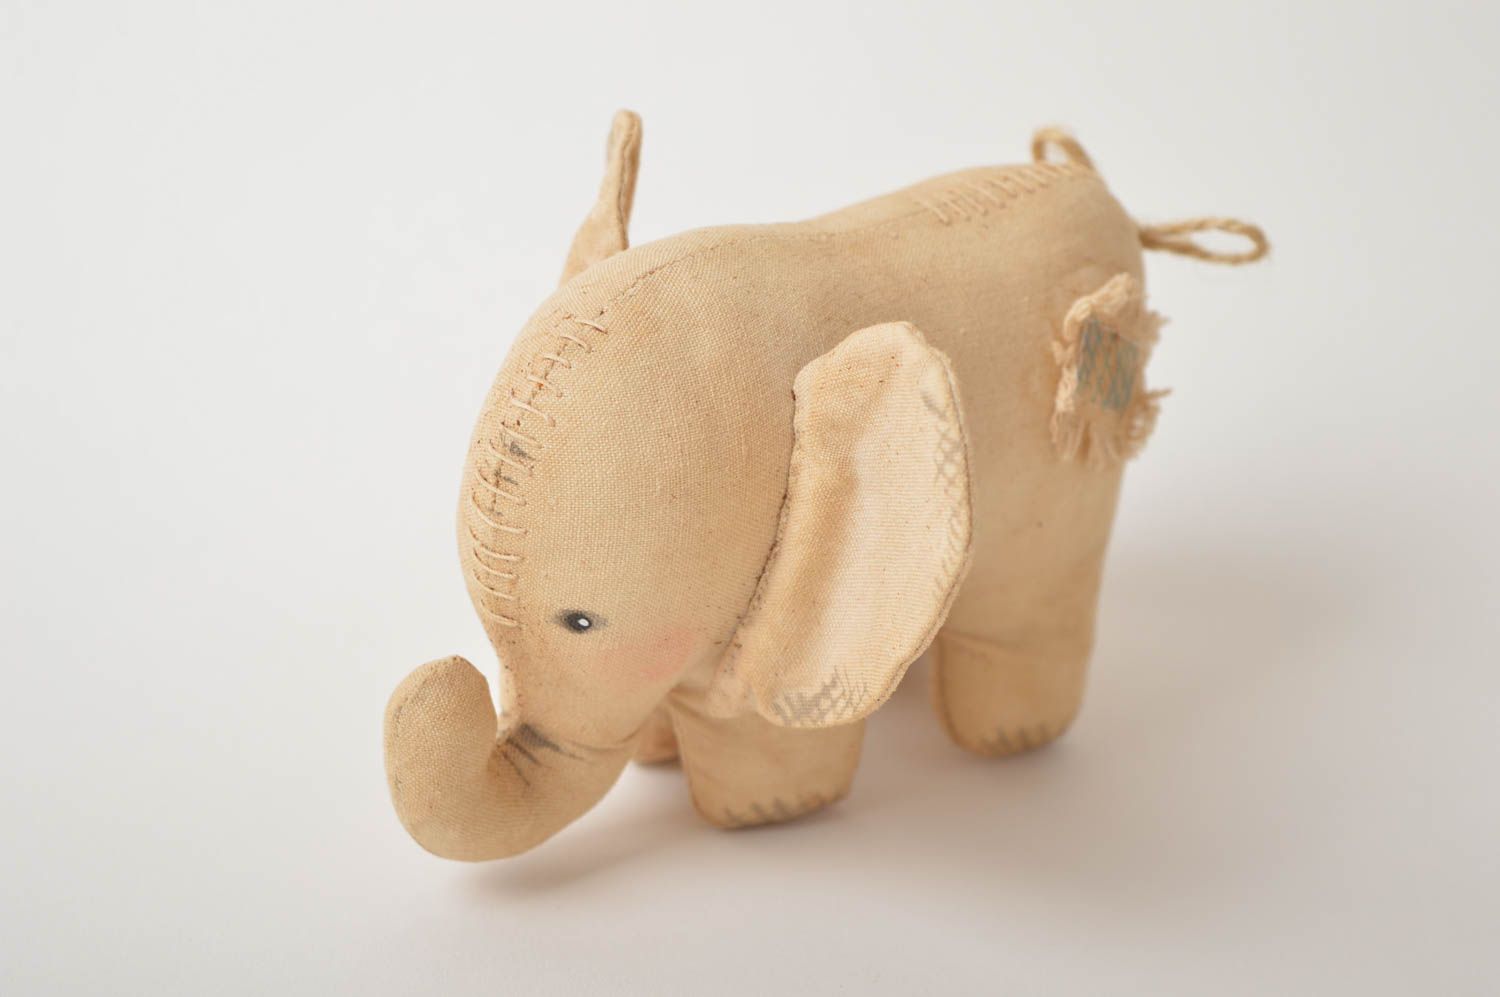 Handmade cute soft toy elephant stuffed toy for children home decor ideas photo 2